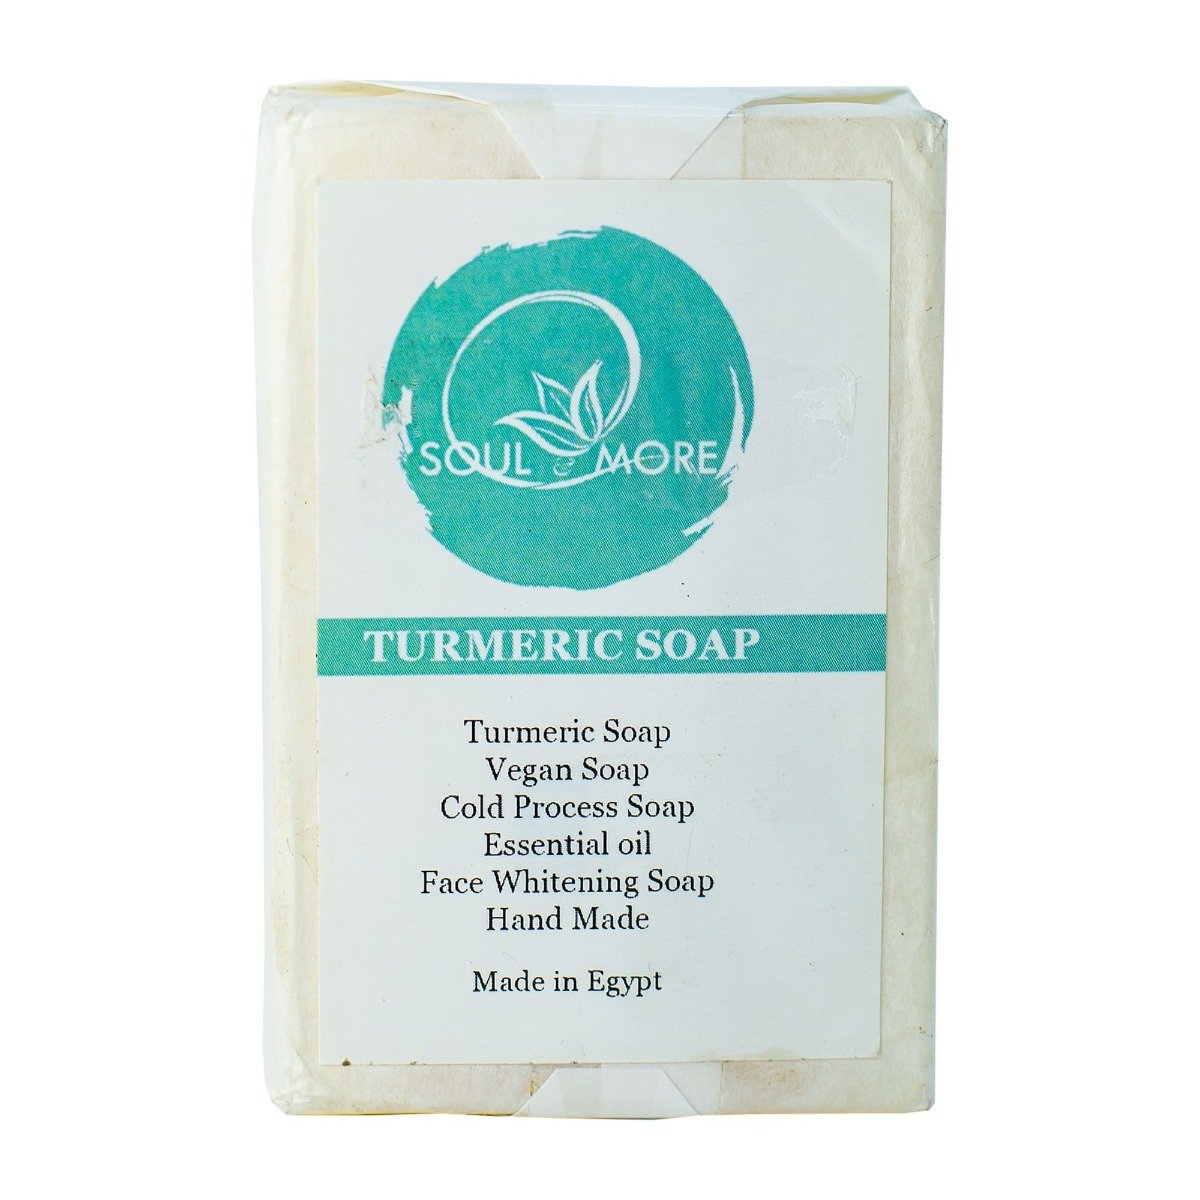 Soul & More Turmeric Soap Bar - Bloom Pharmacy